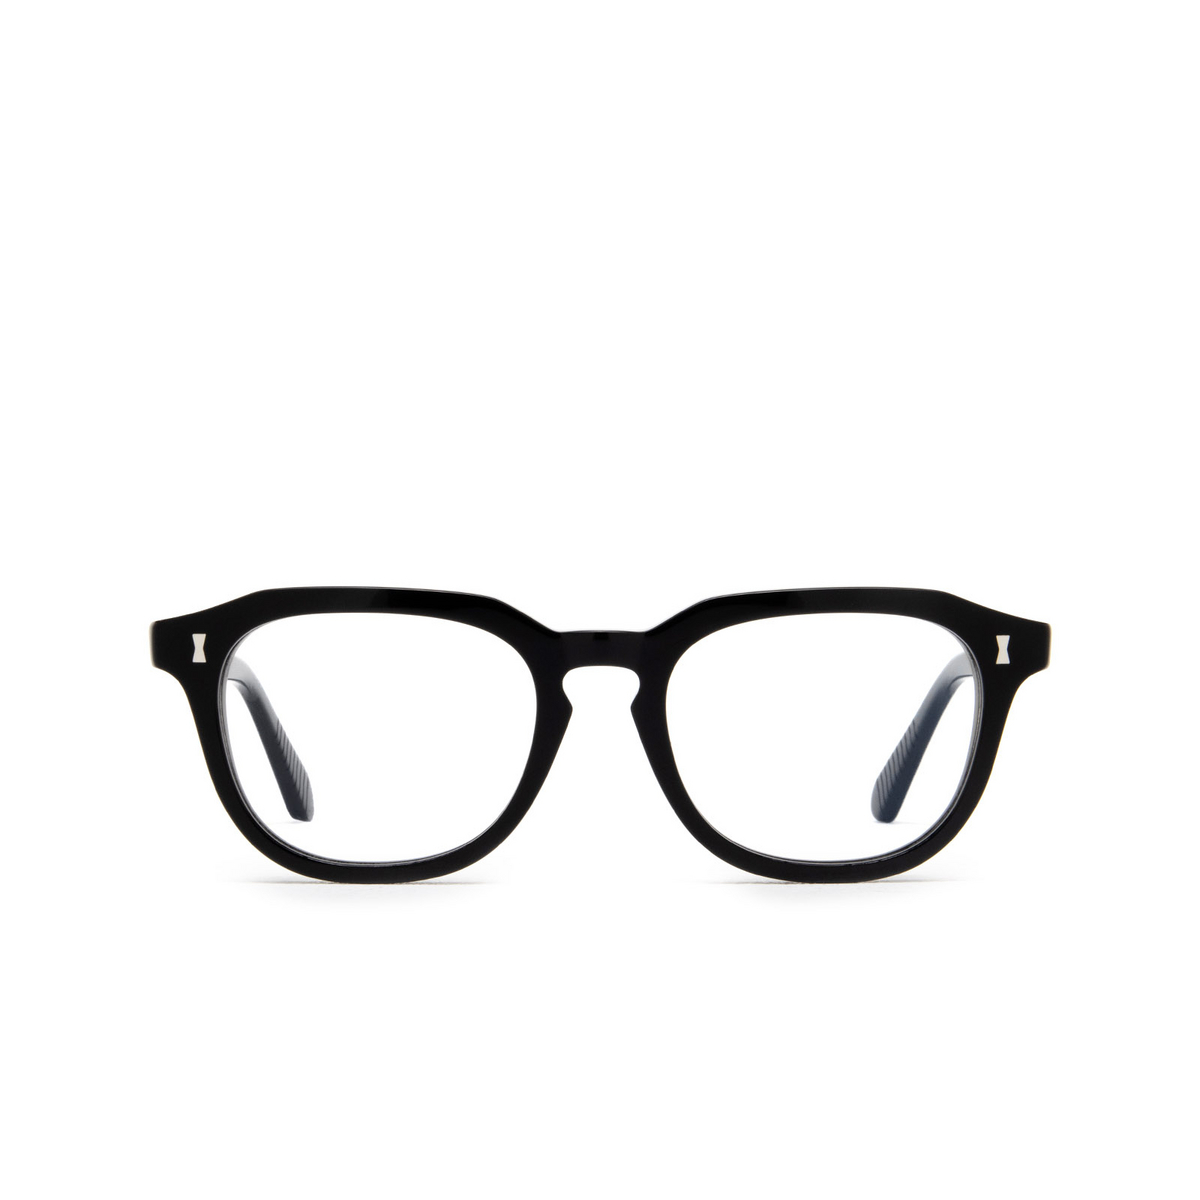 Cubitts BUNNING Eyeglasses BUN-R-BLA Black - front view